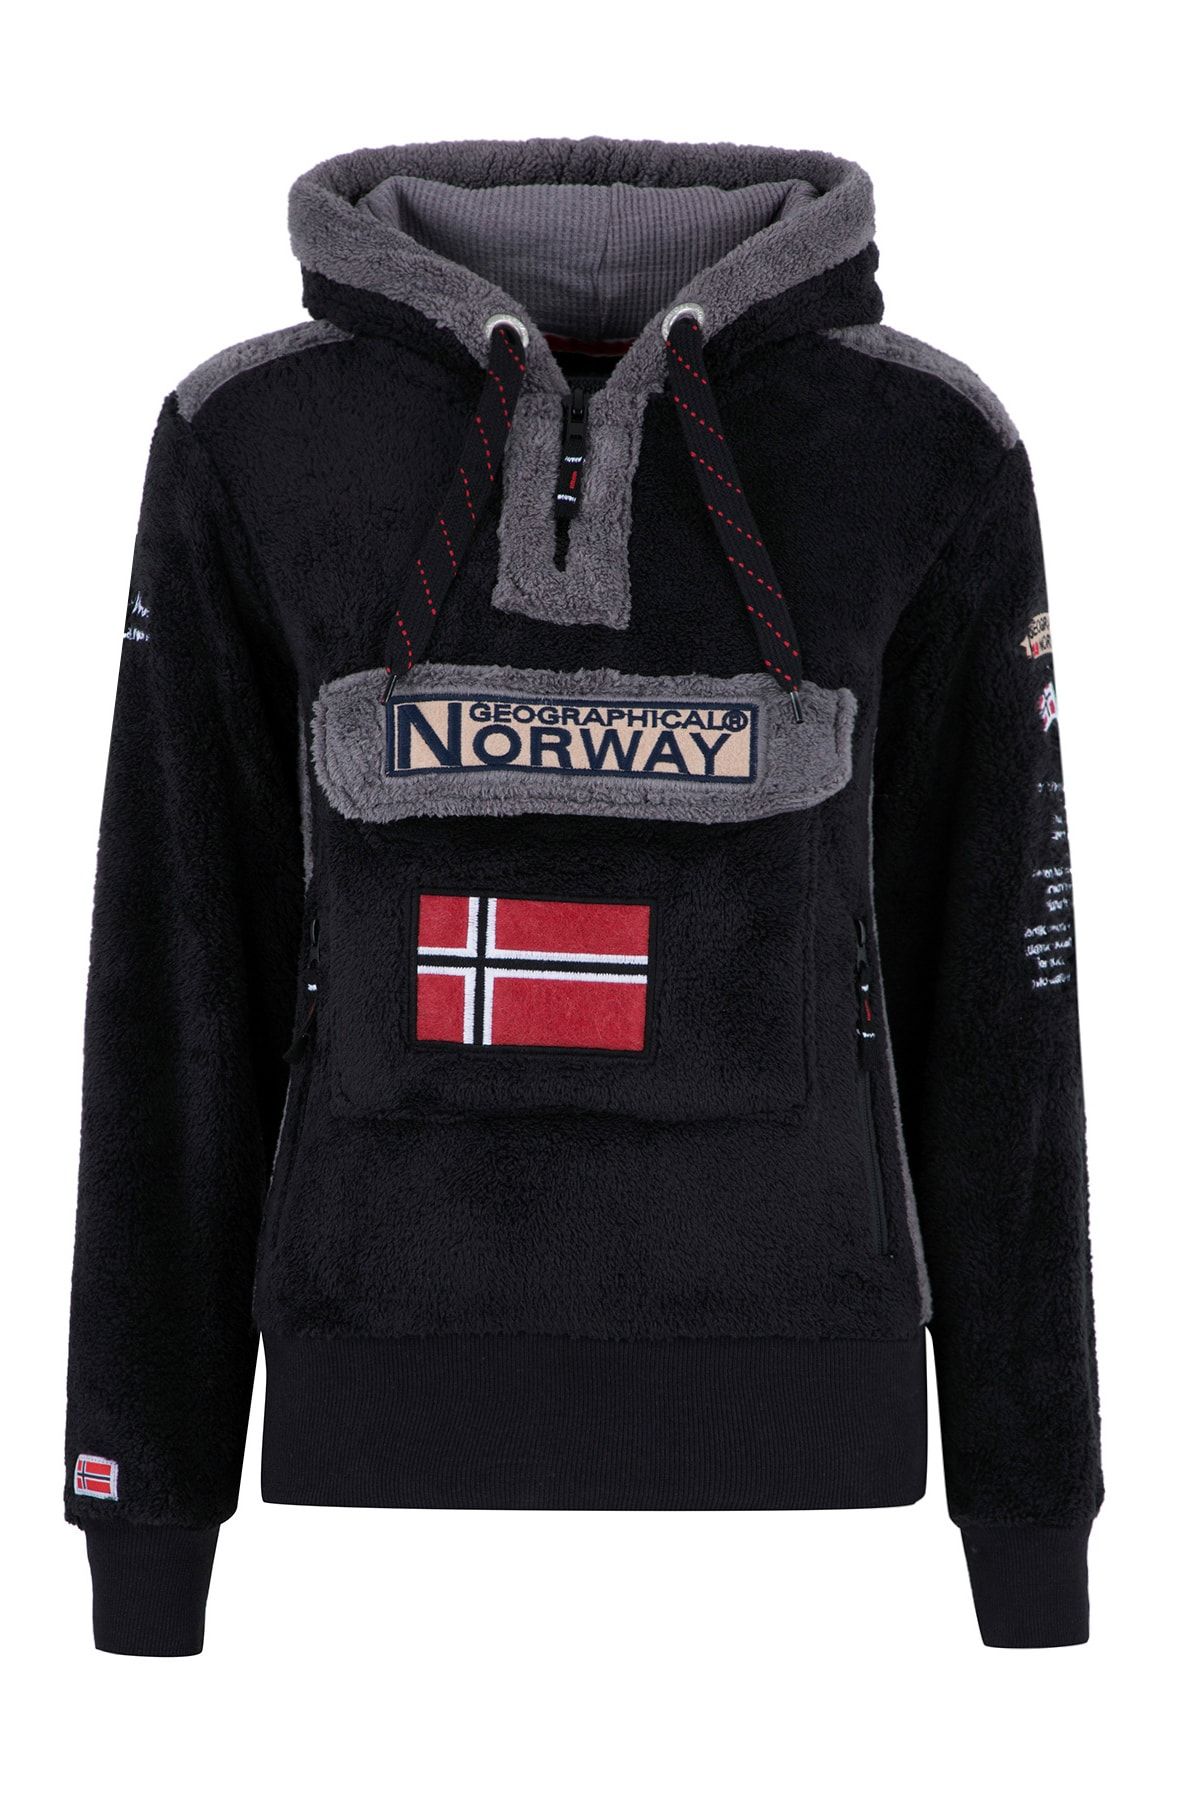 Norway Geographical Kadın Siyah Sweatshirt GYMCLASS